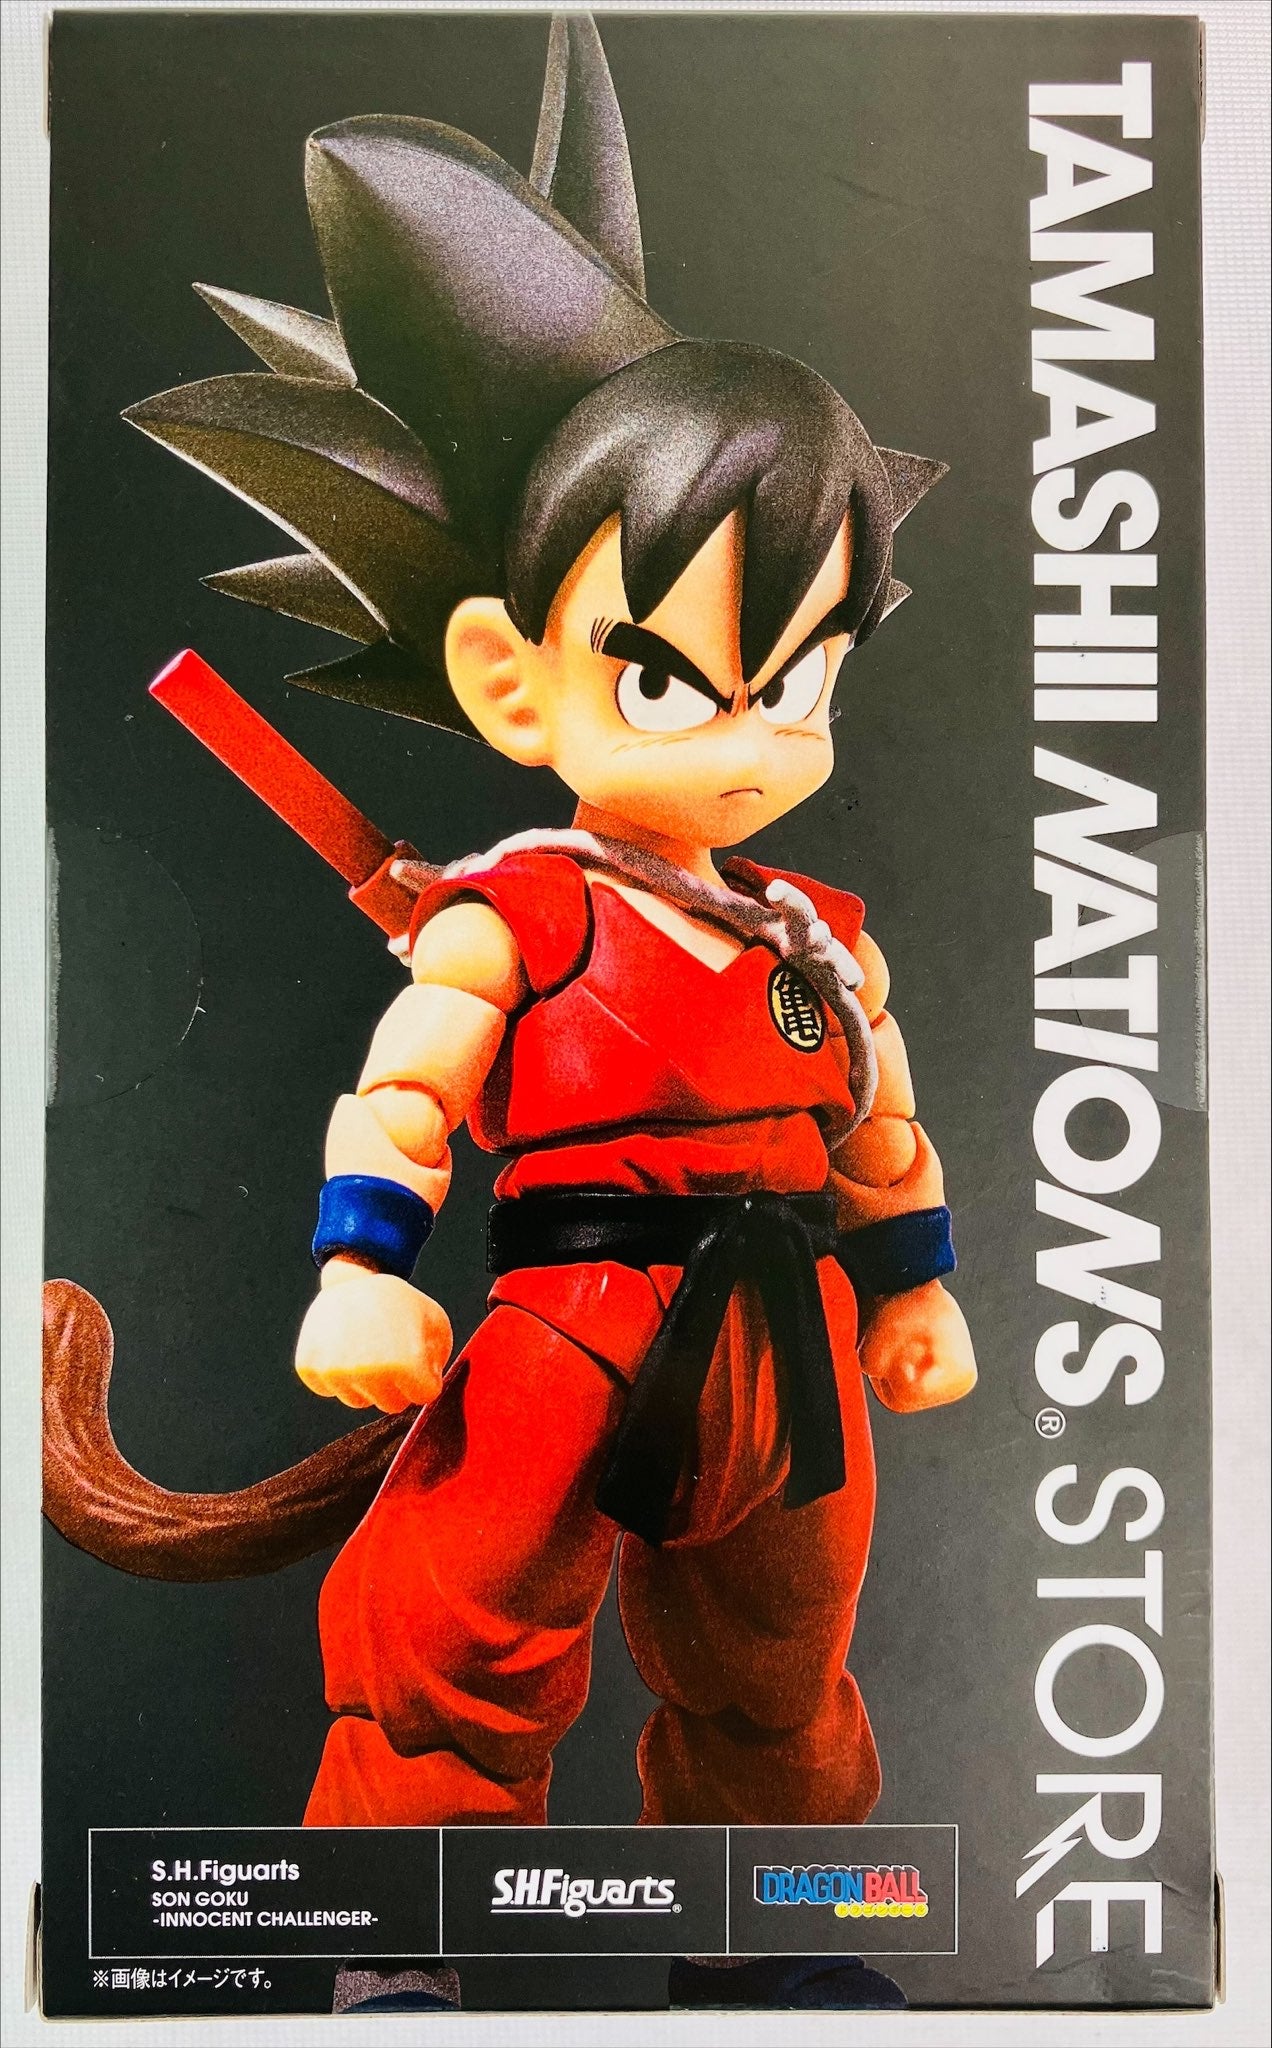 S.H.Figuarts Son Goku - Innocent Challenger Tamashii Nations Tokyo Limited